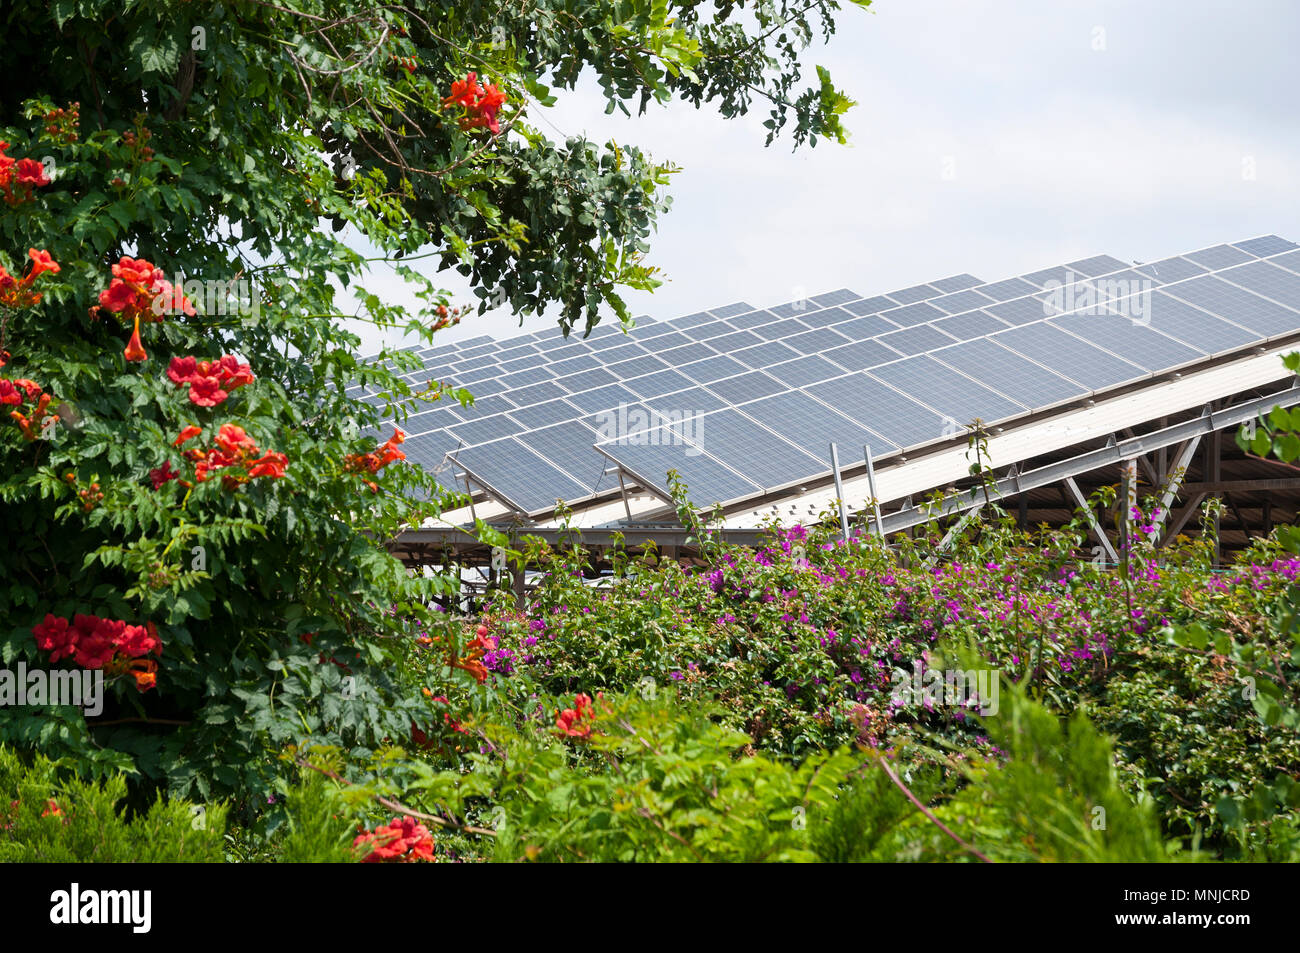 green-energy-solar-panels-on-roof-stock-photo-alamy